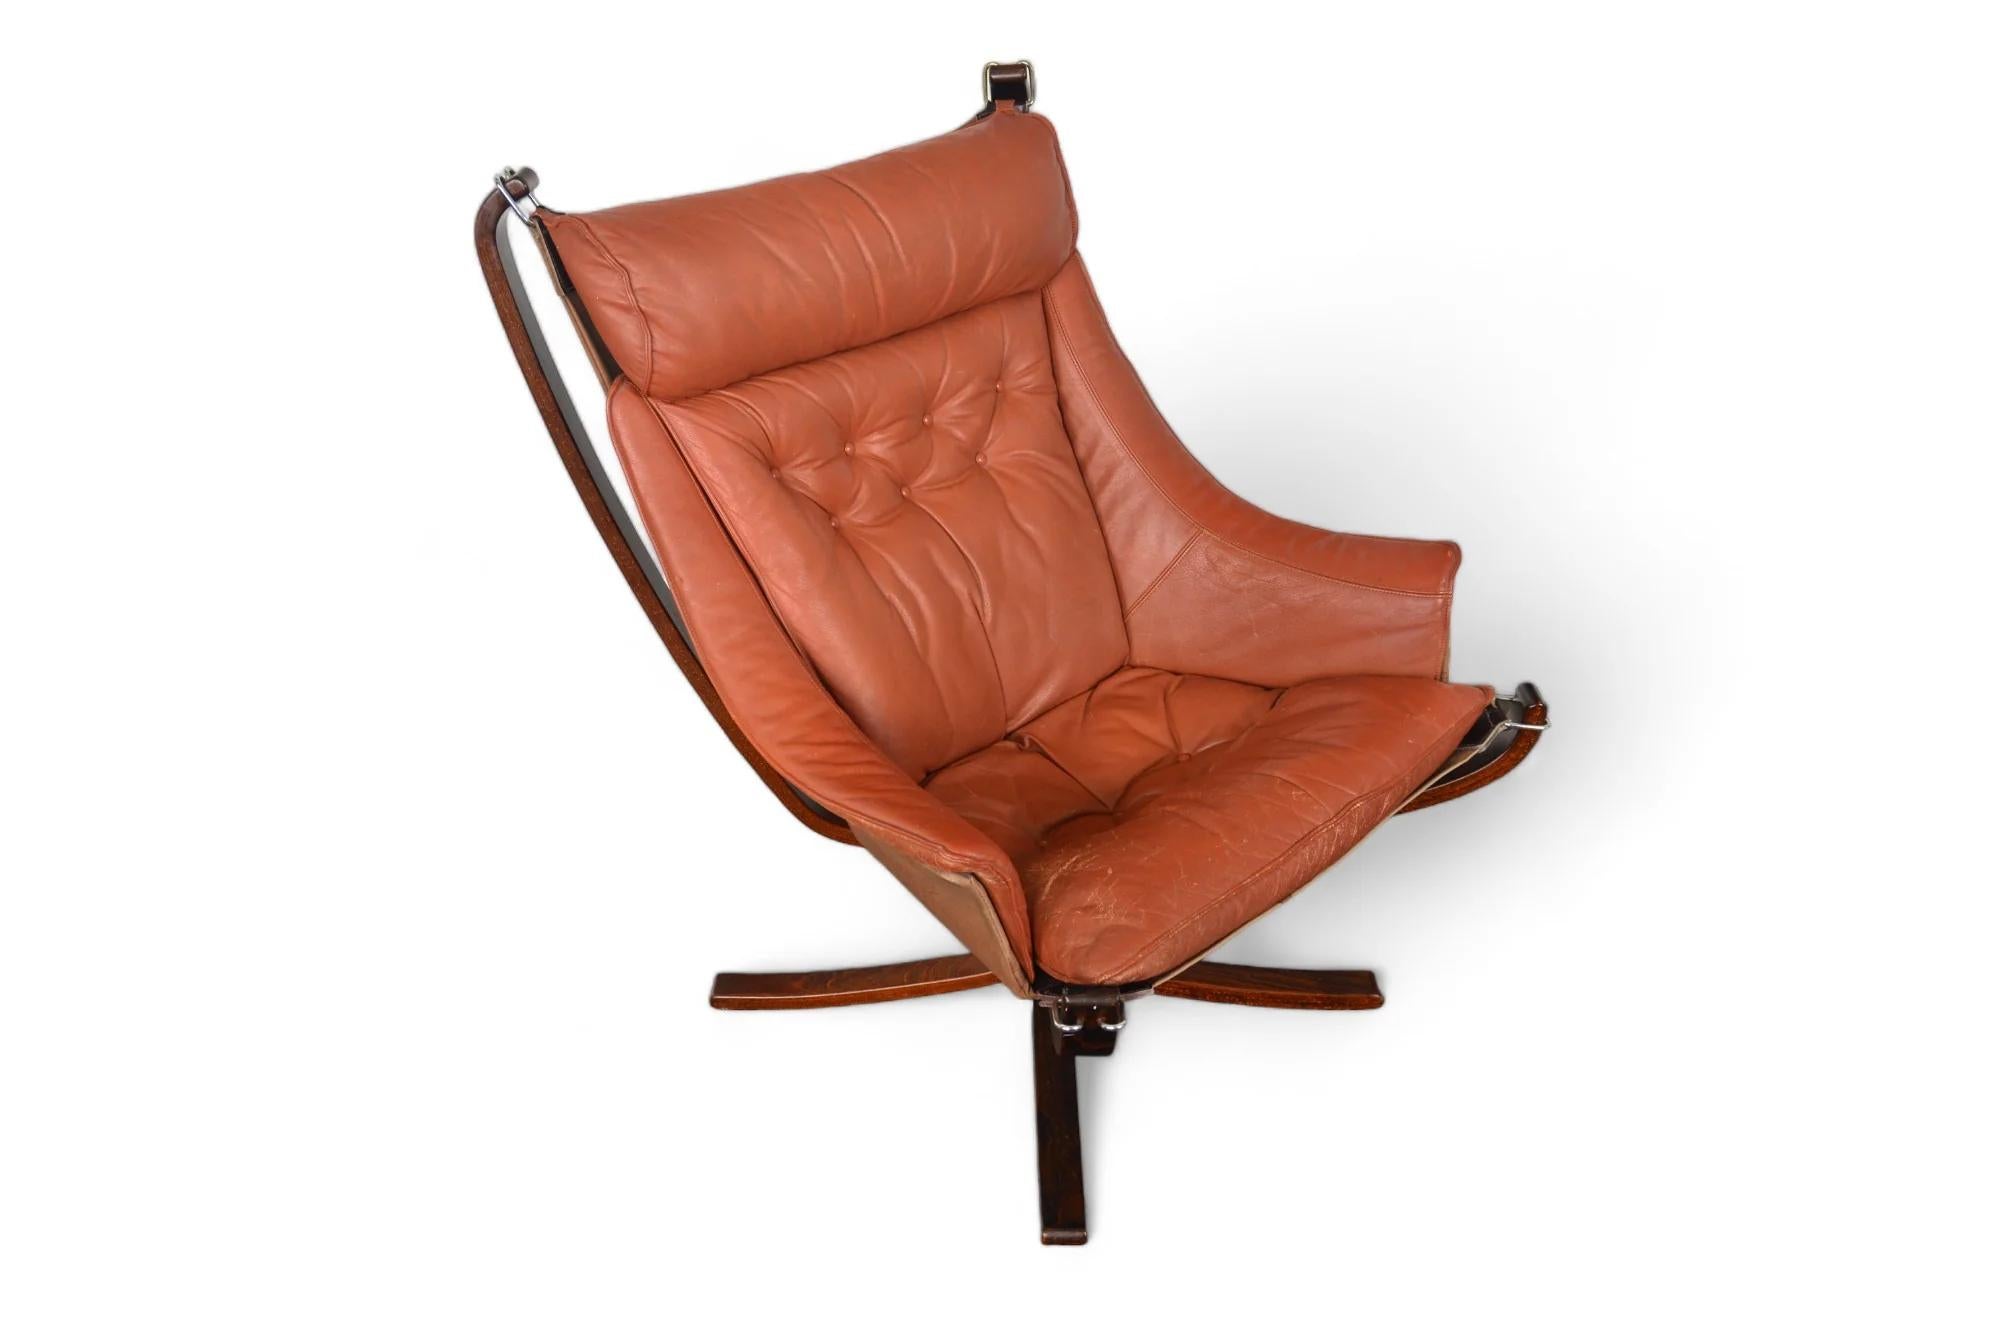 Origin: Norway
Designer: Sigurd Ressell
Manufacturer: Vatne Møbler
Era: 1960s
Materials: Leather, Bent Beech
Measurements: 32″ wide x 33″ deep x 39.5″ tall
Seat Height: 18″ tall

Condition: In excellent original condition.